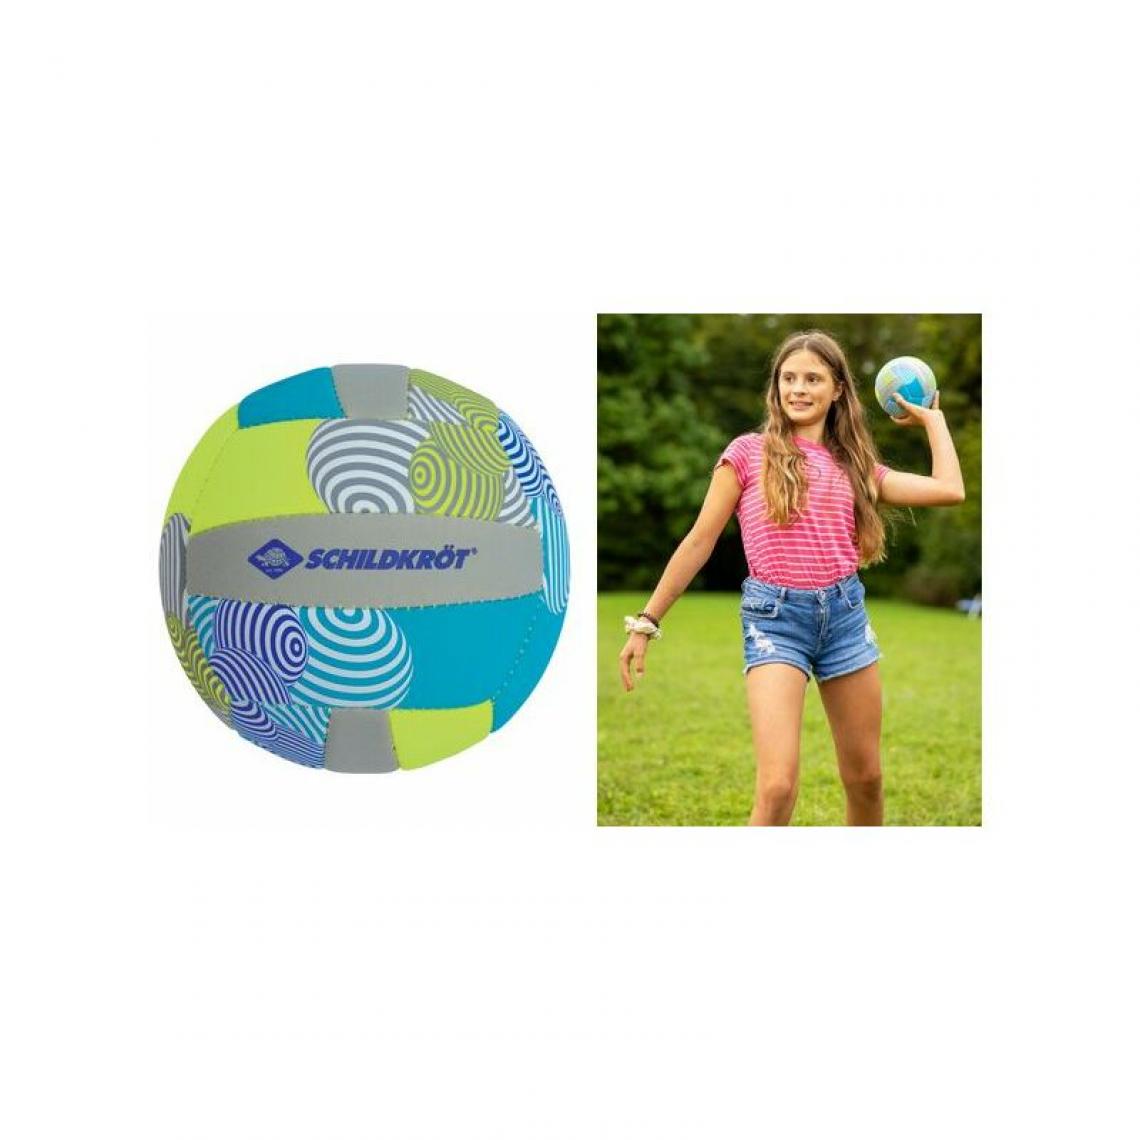 Schilder Fun Sport - SCHILDKRÖT Mini ballon de beach-volley en néoprène,taille 2 () - Jeux de balles